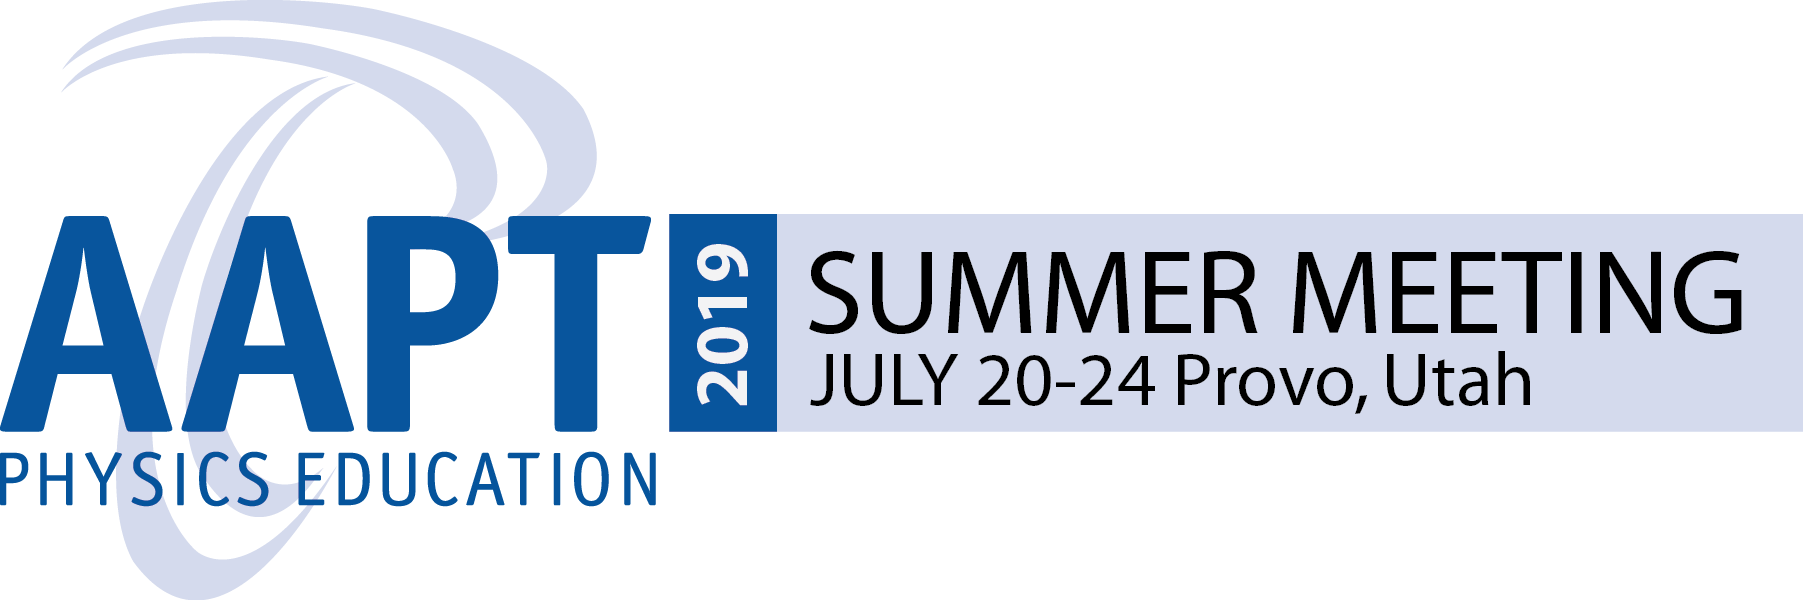 AAPT Summer Meeting 2019 in Provo, UT